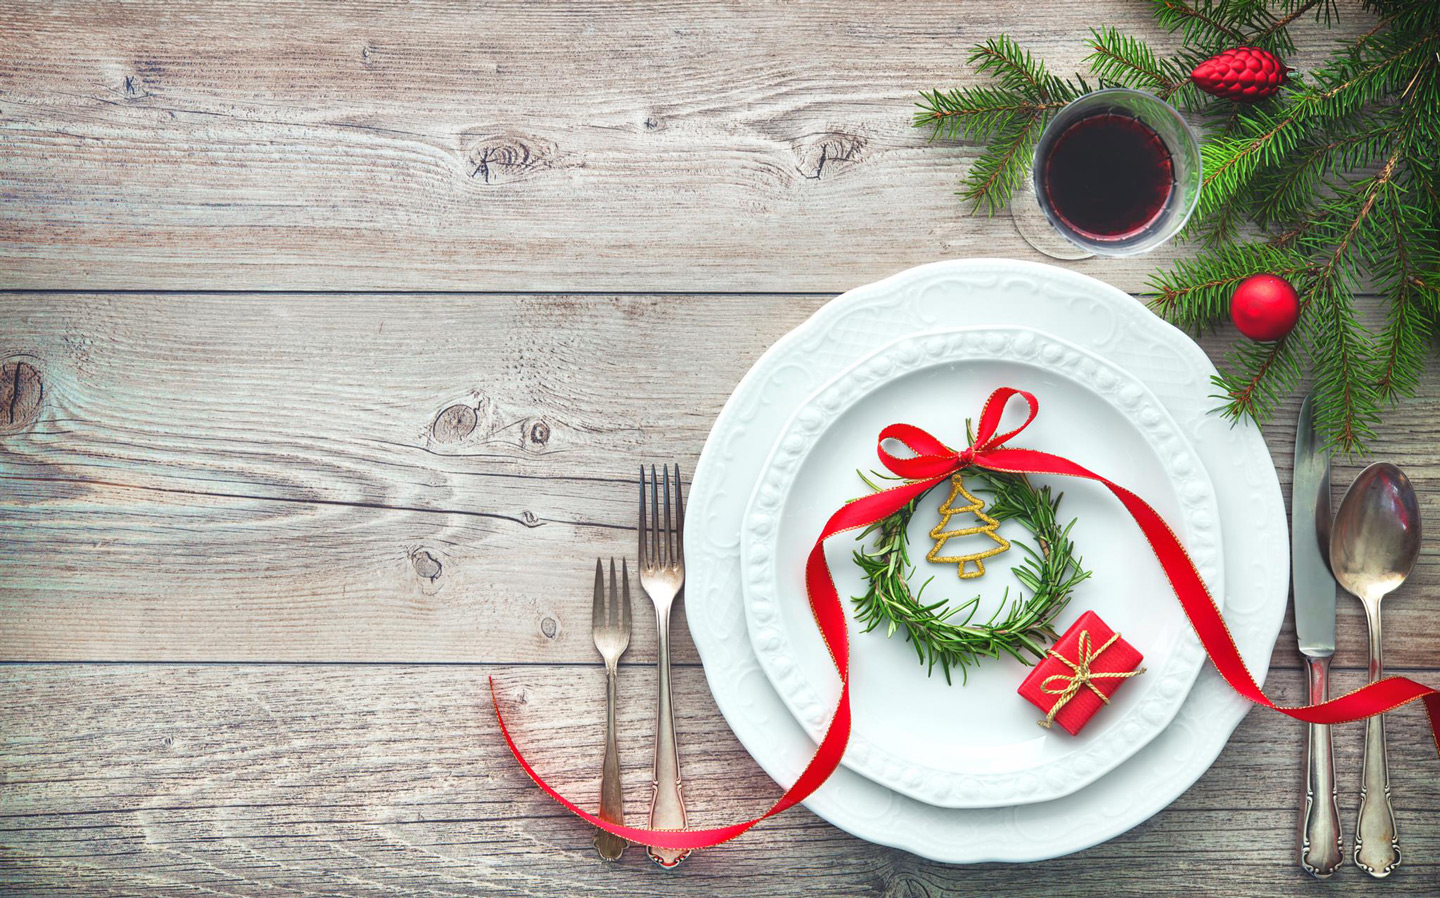 Restaurants Serving Christmas Meals in Pawleys Island